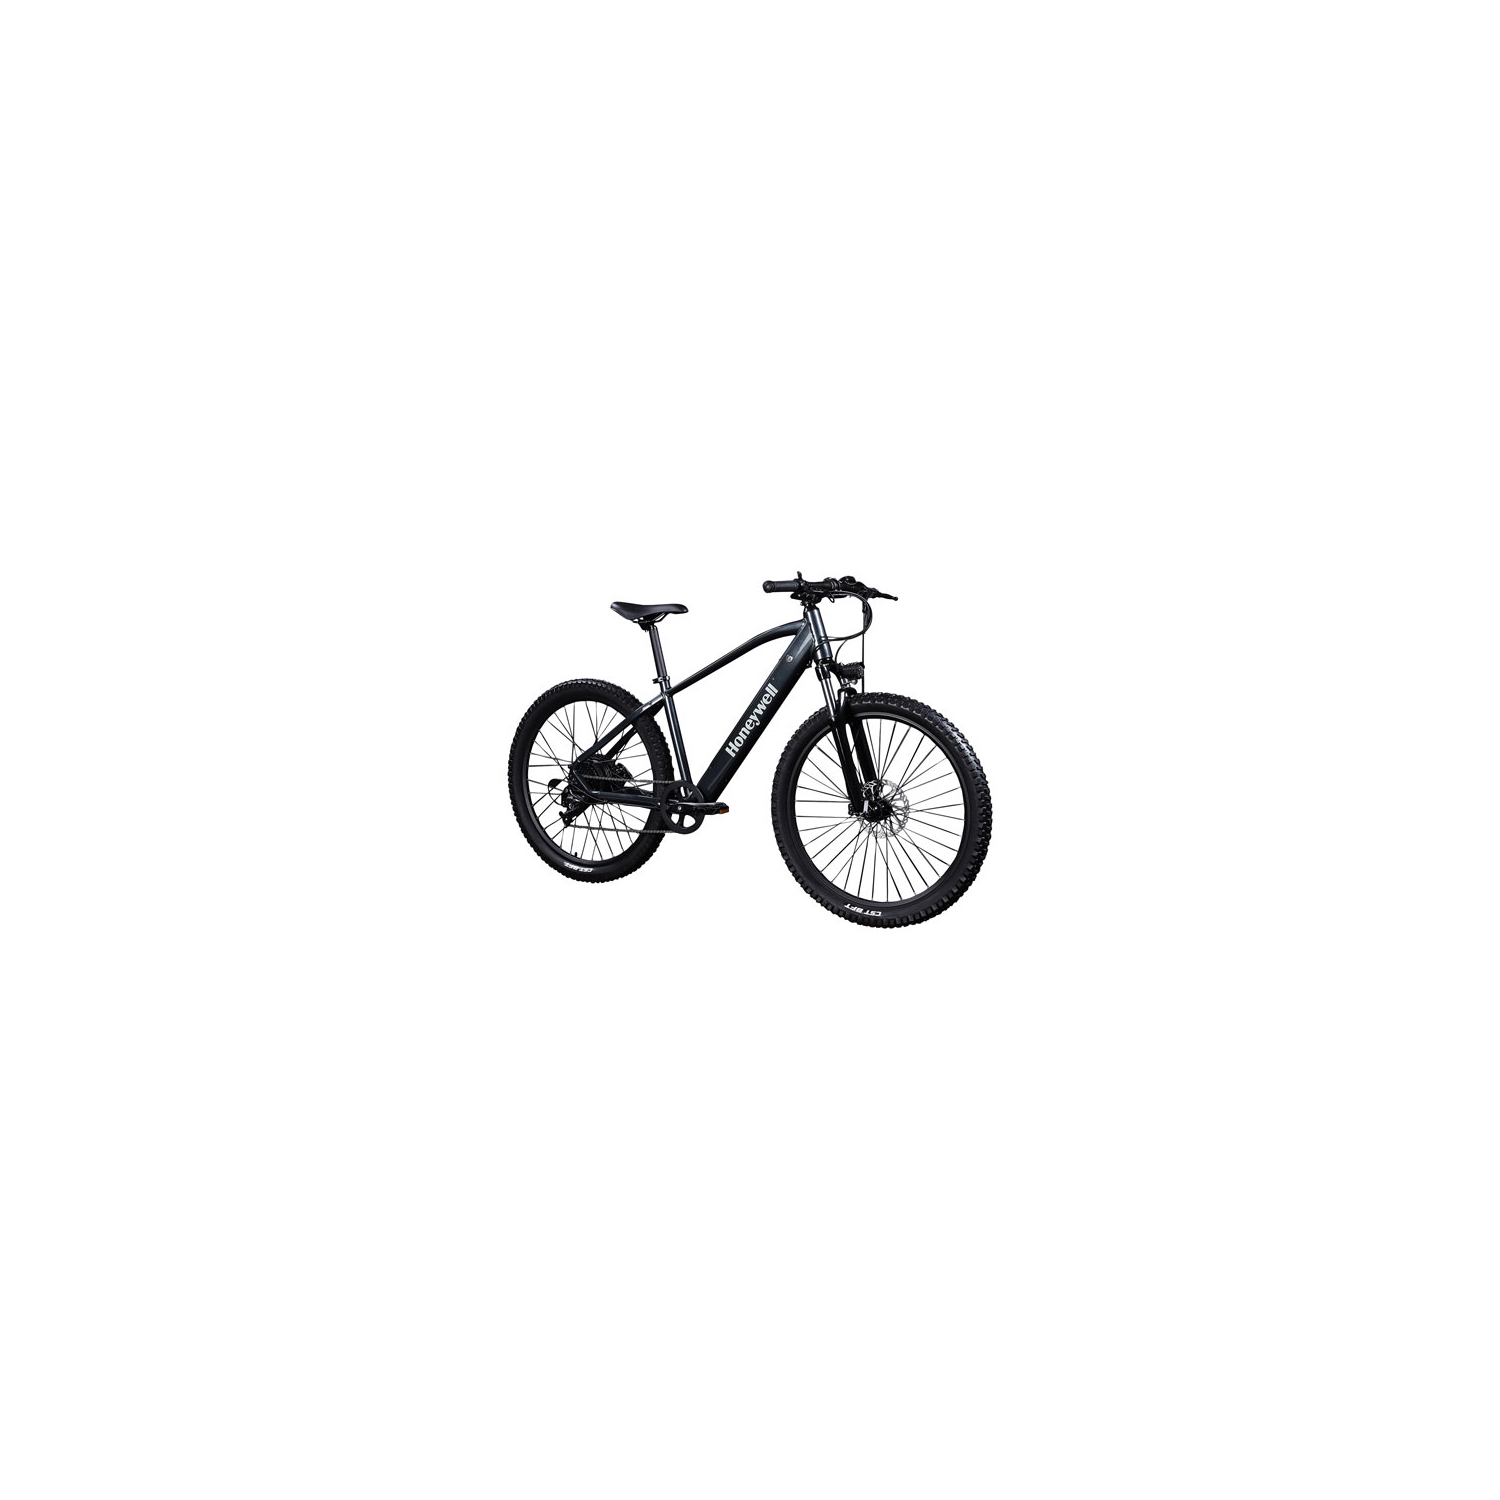 Open Box - Honeywell El Capitan 500W Electric Mountain Bike with up to 64km Battery Life - Grey